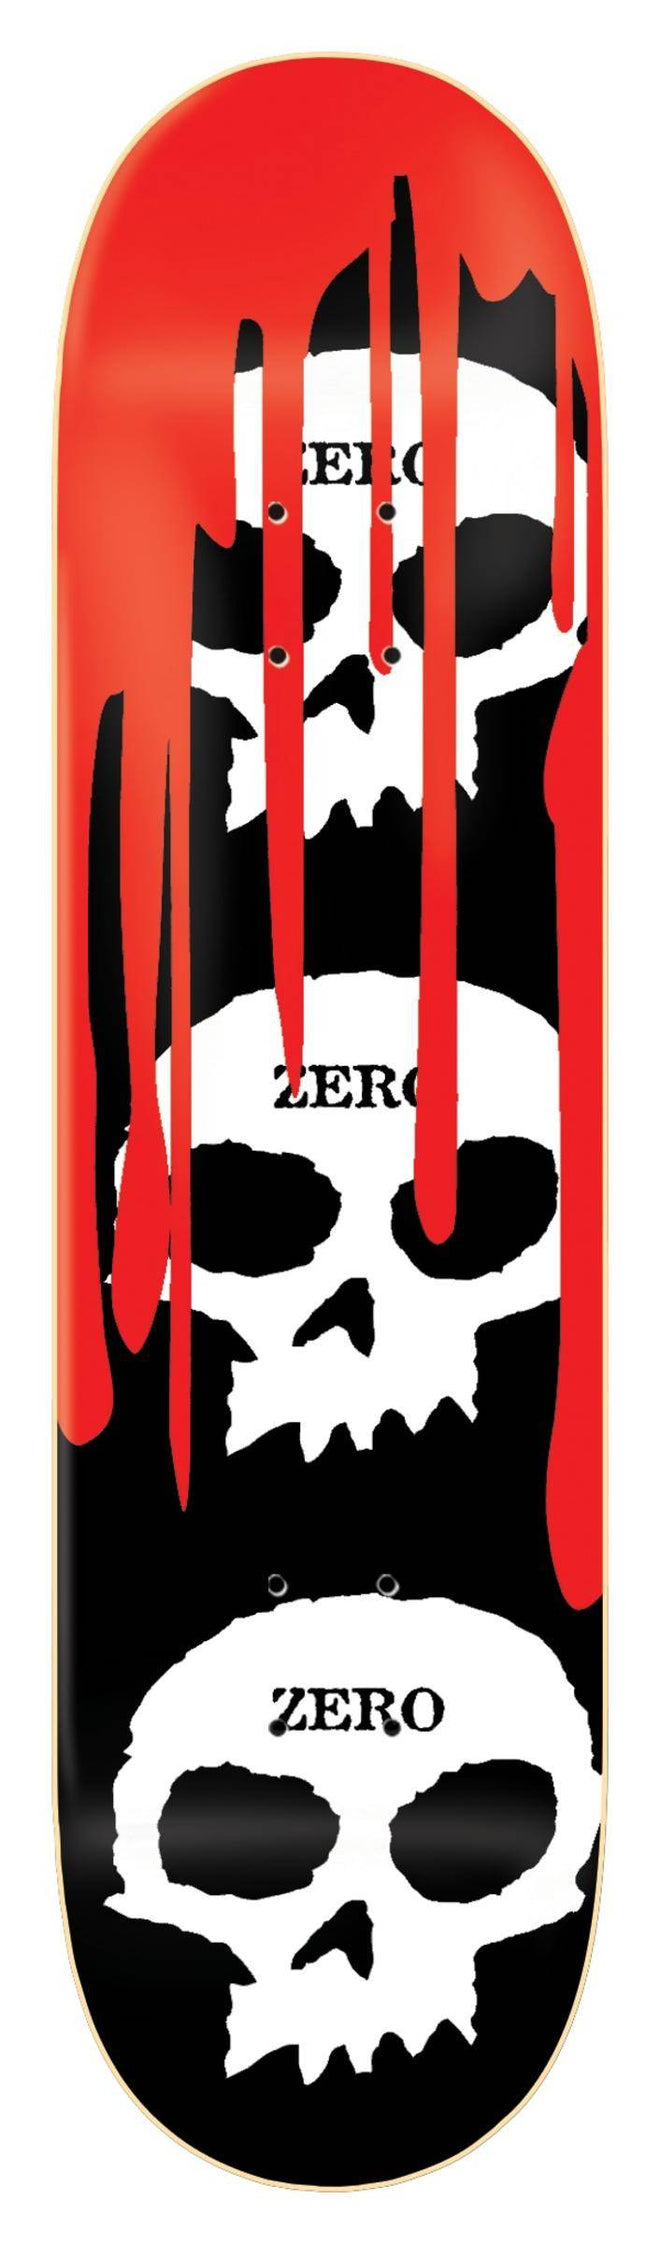 Zero 3 Skull Blood Skateboard Deck - M I L O S P O R T